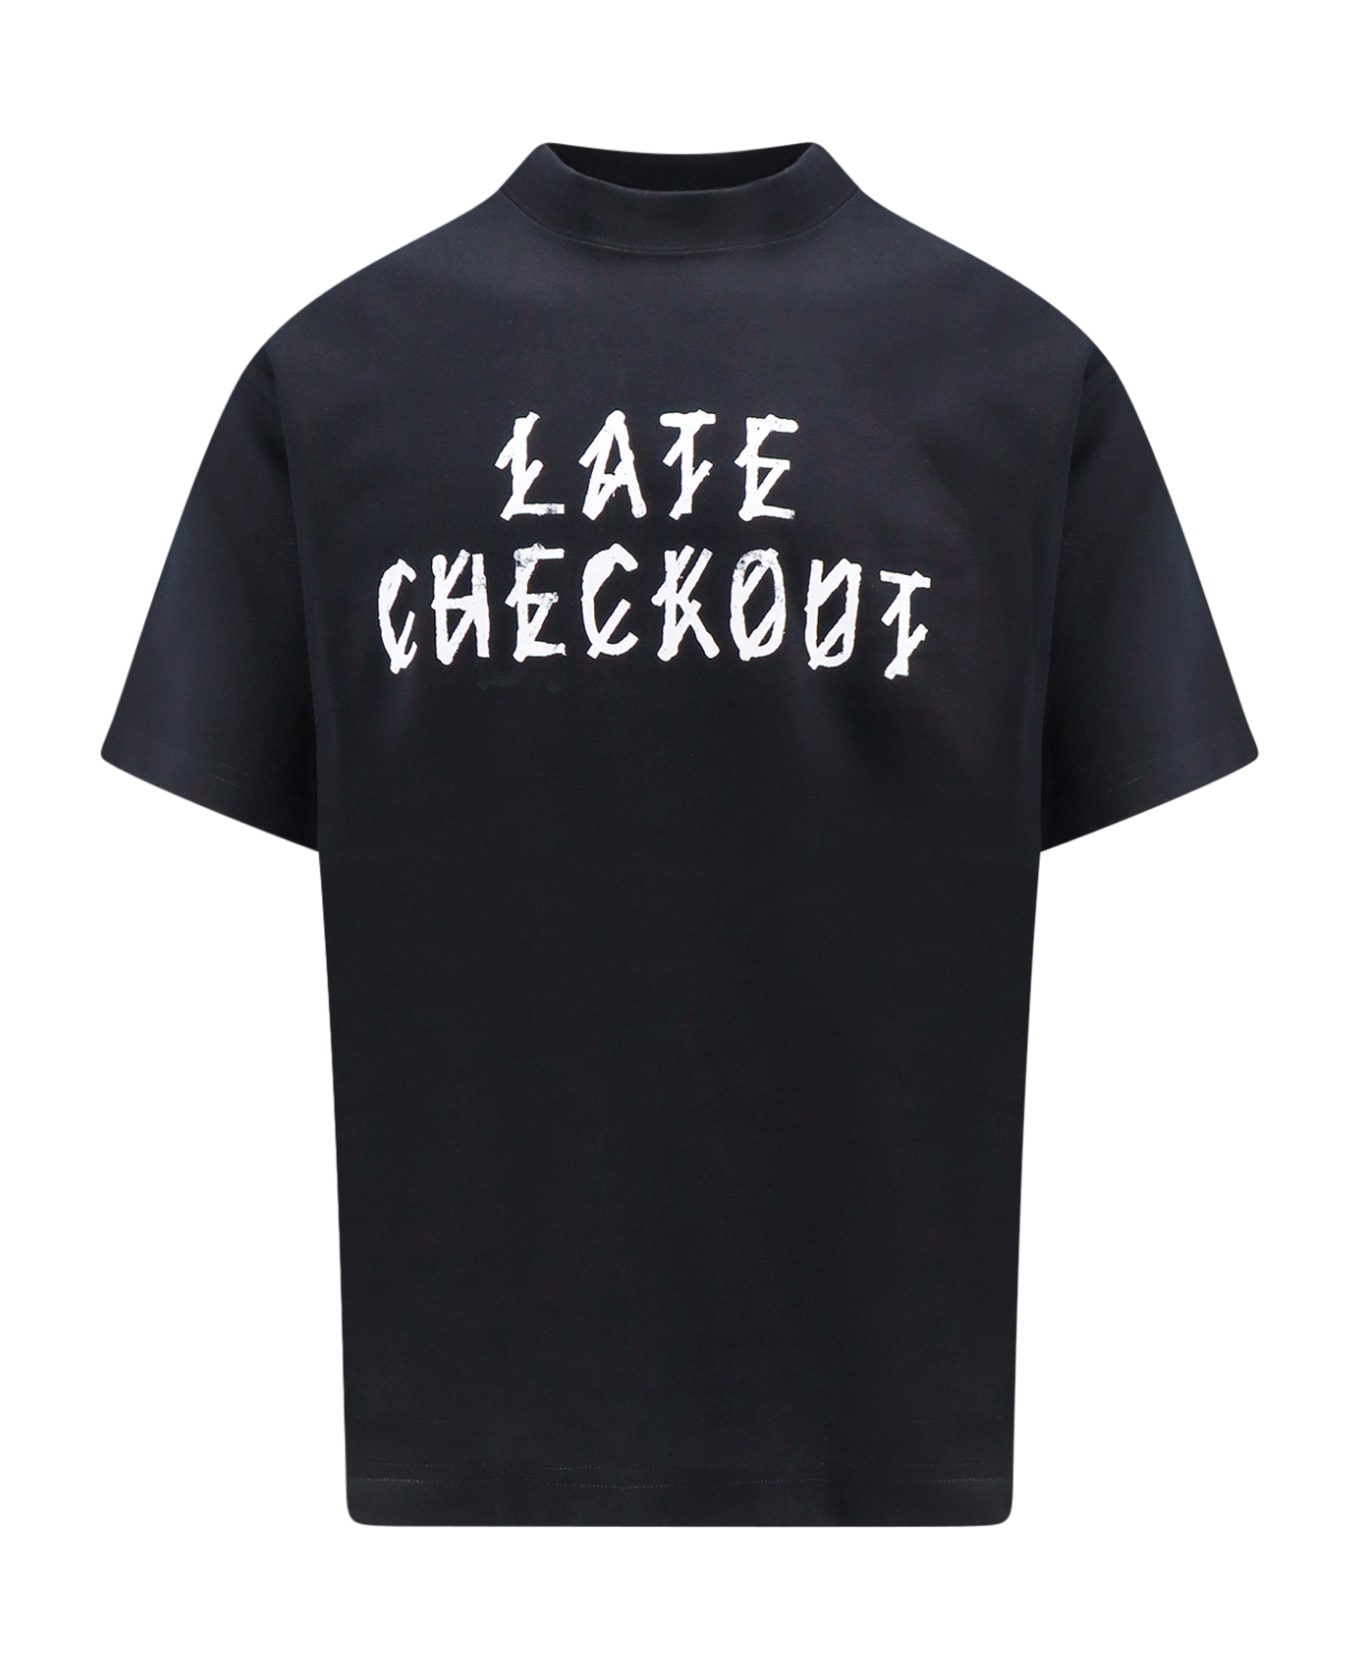 44 Label Group T-shirt - Black シャツ